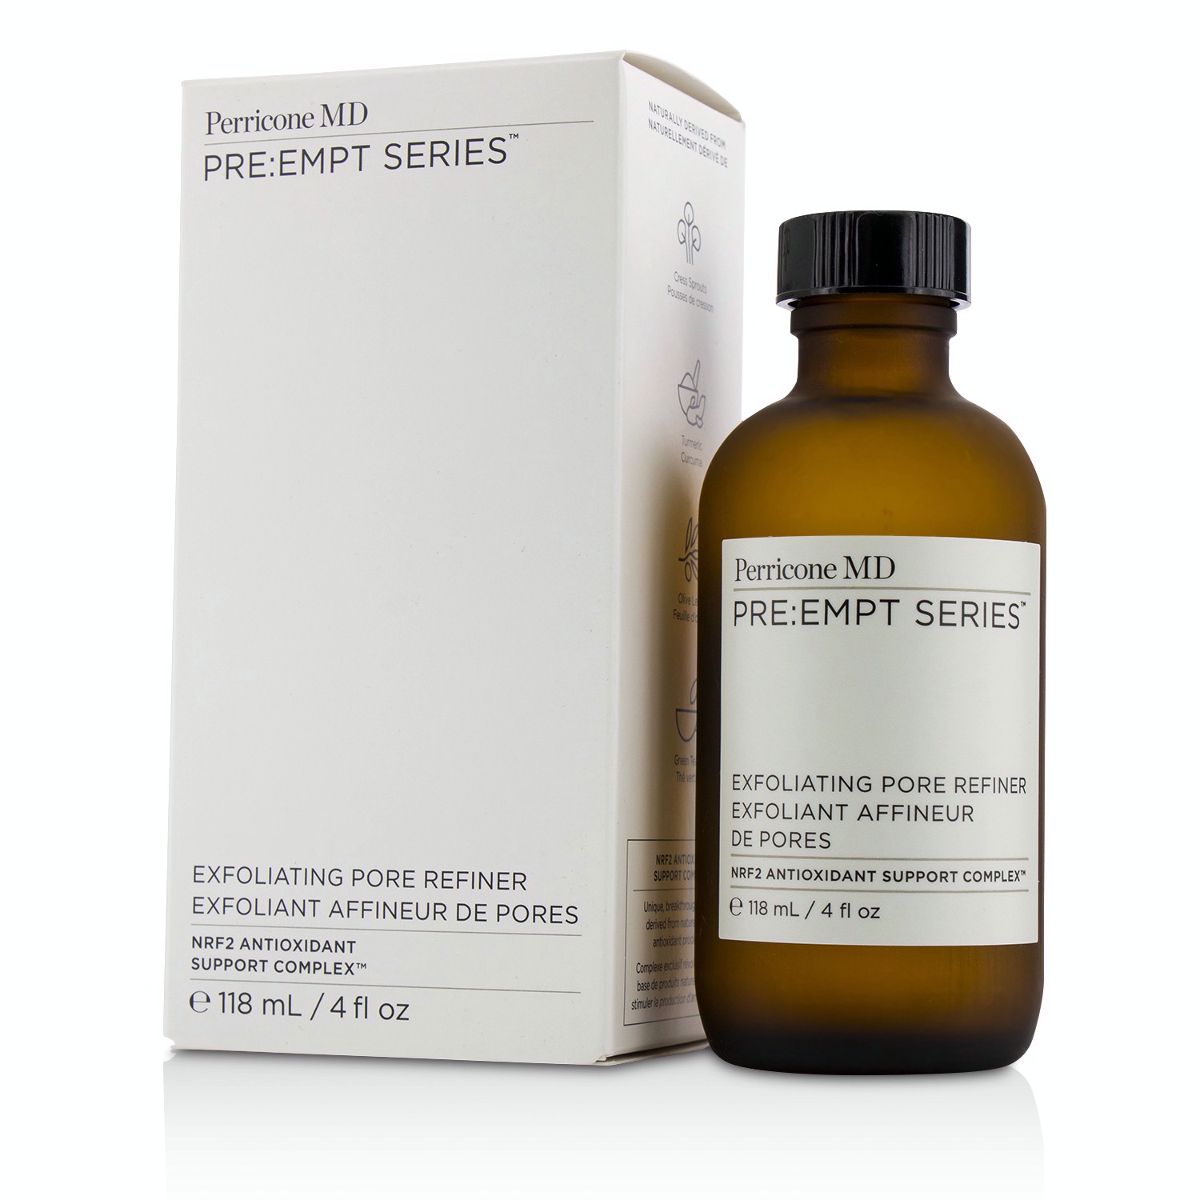 Pre:Empt Series Exfoliating Pore Refiner Perricone MD Image